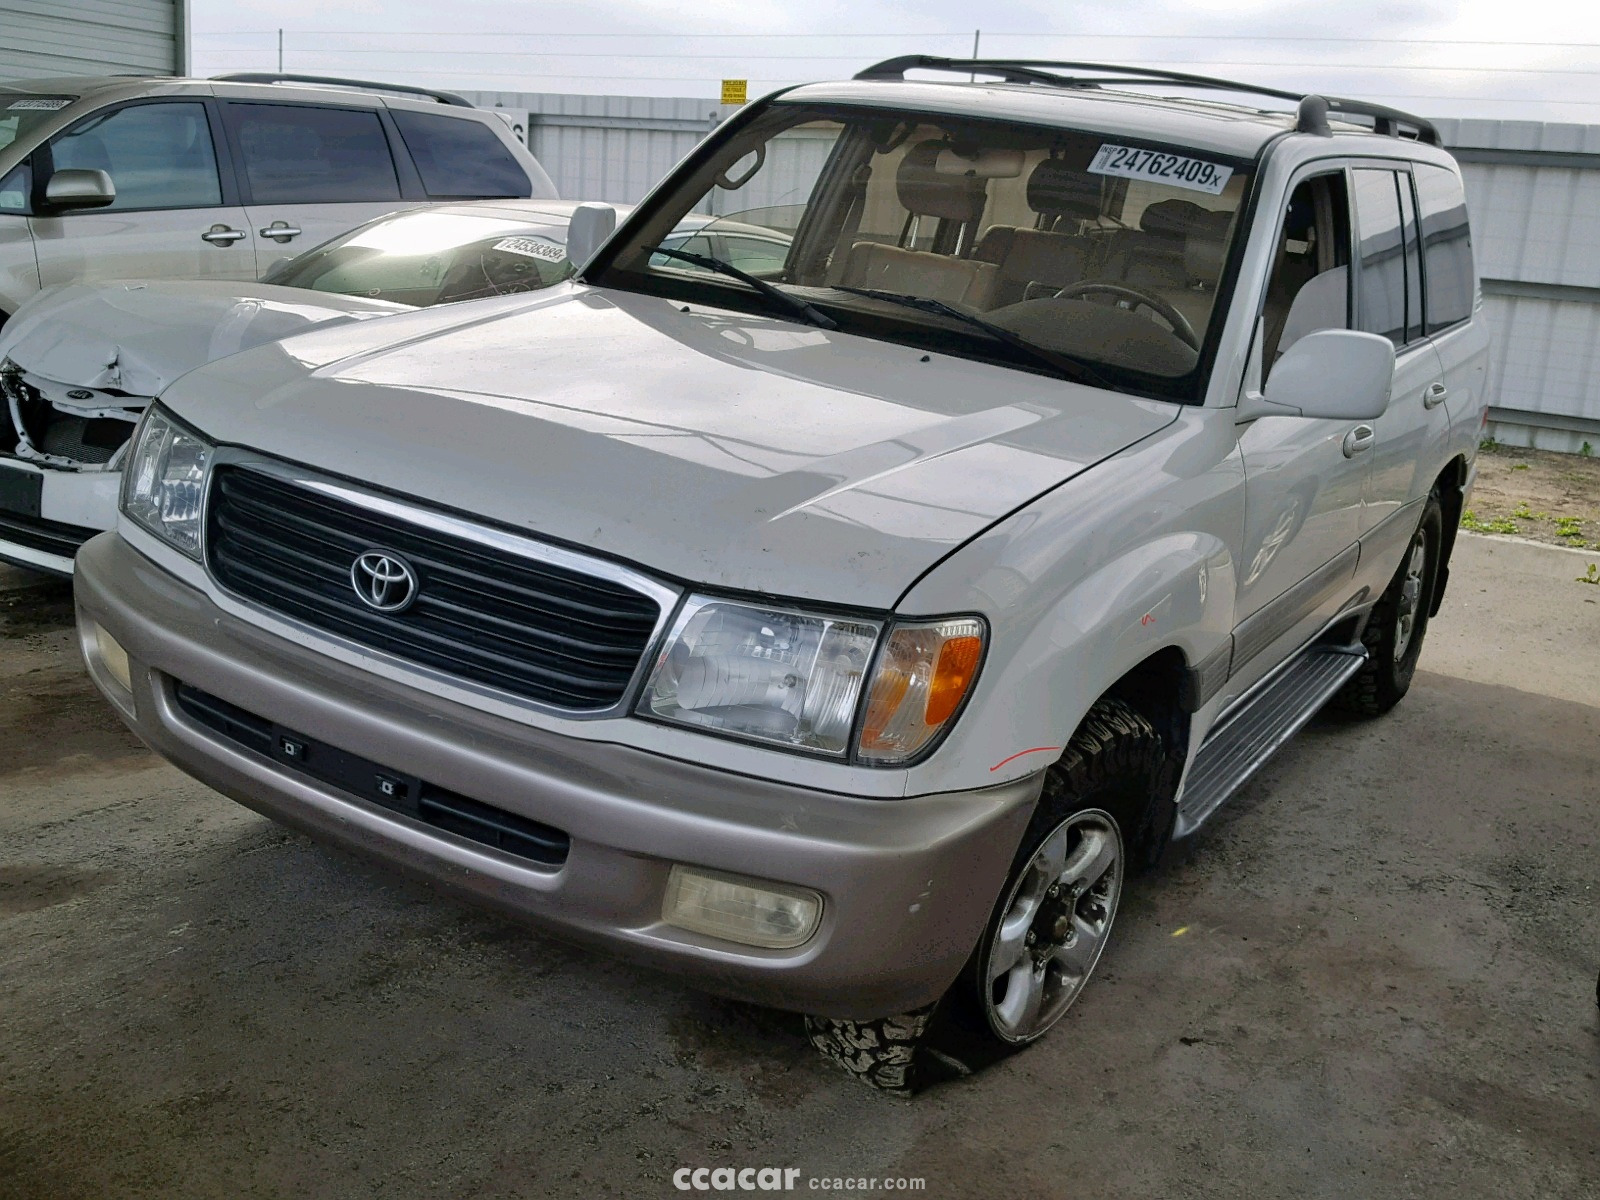 1999 Toyota Land Cruiser Base | Salvage & Damaged Cars for Sale